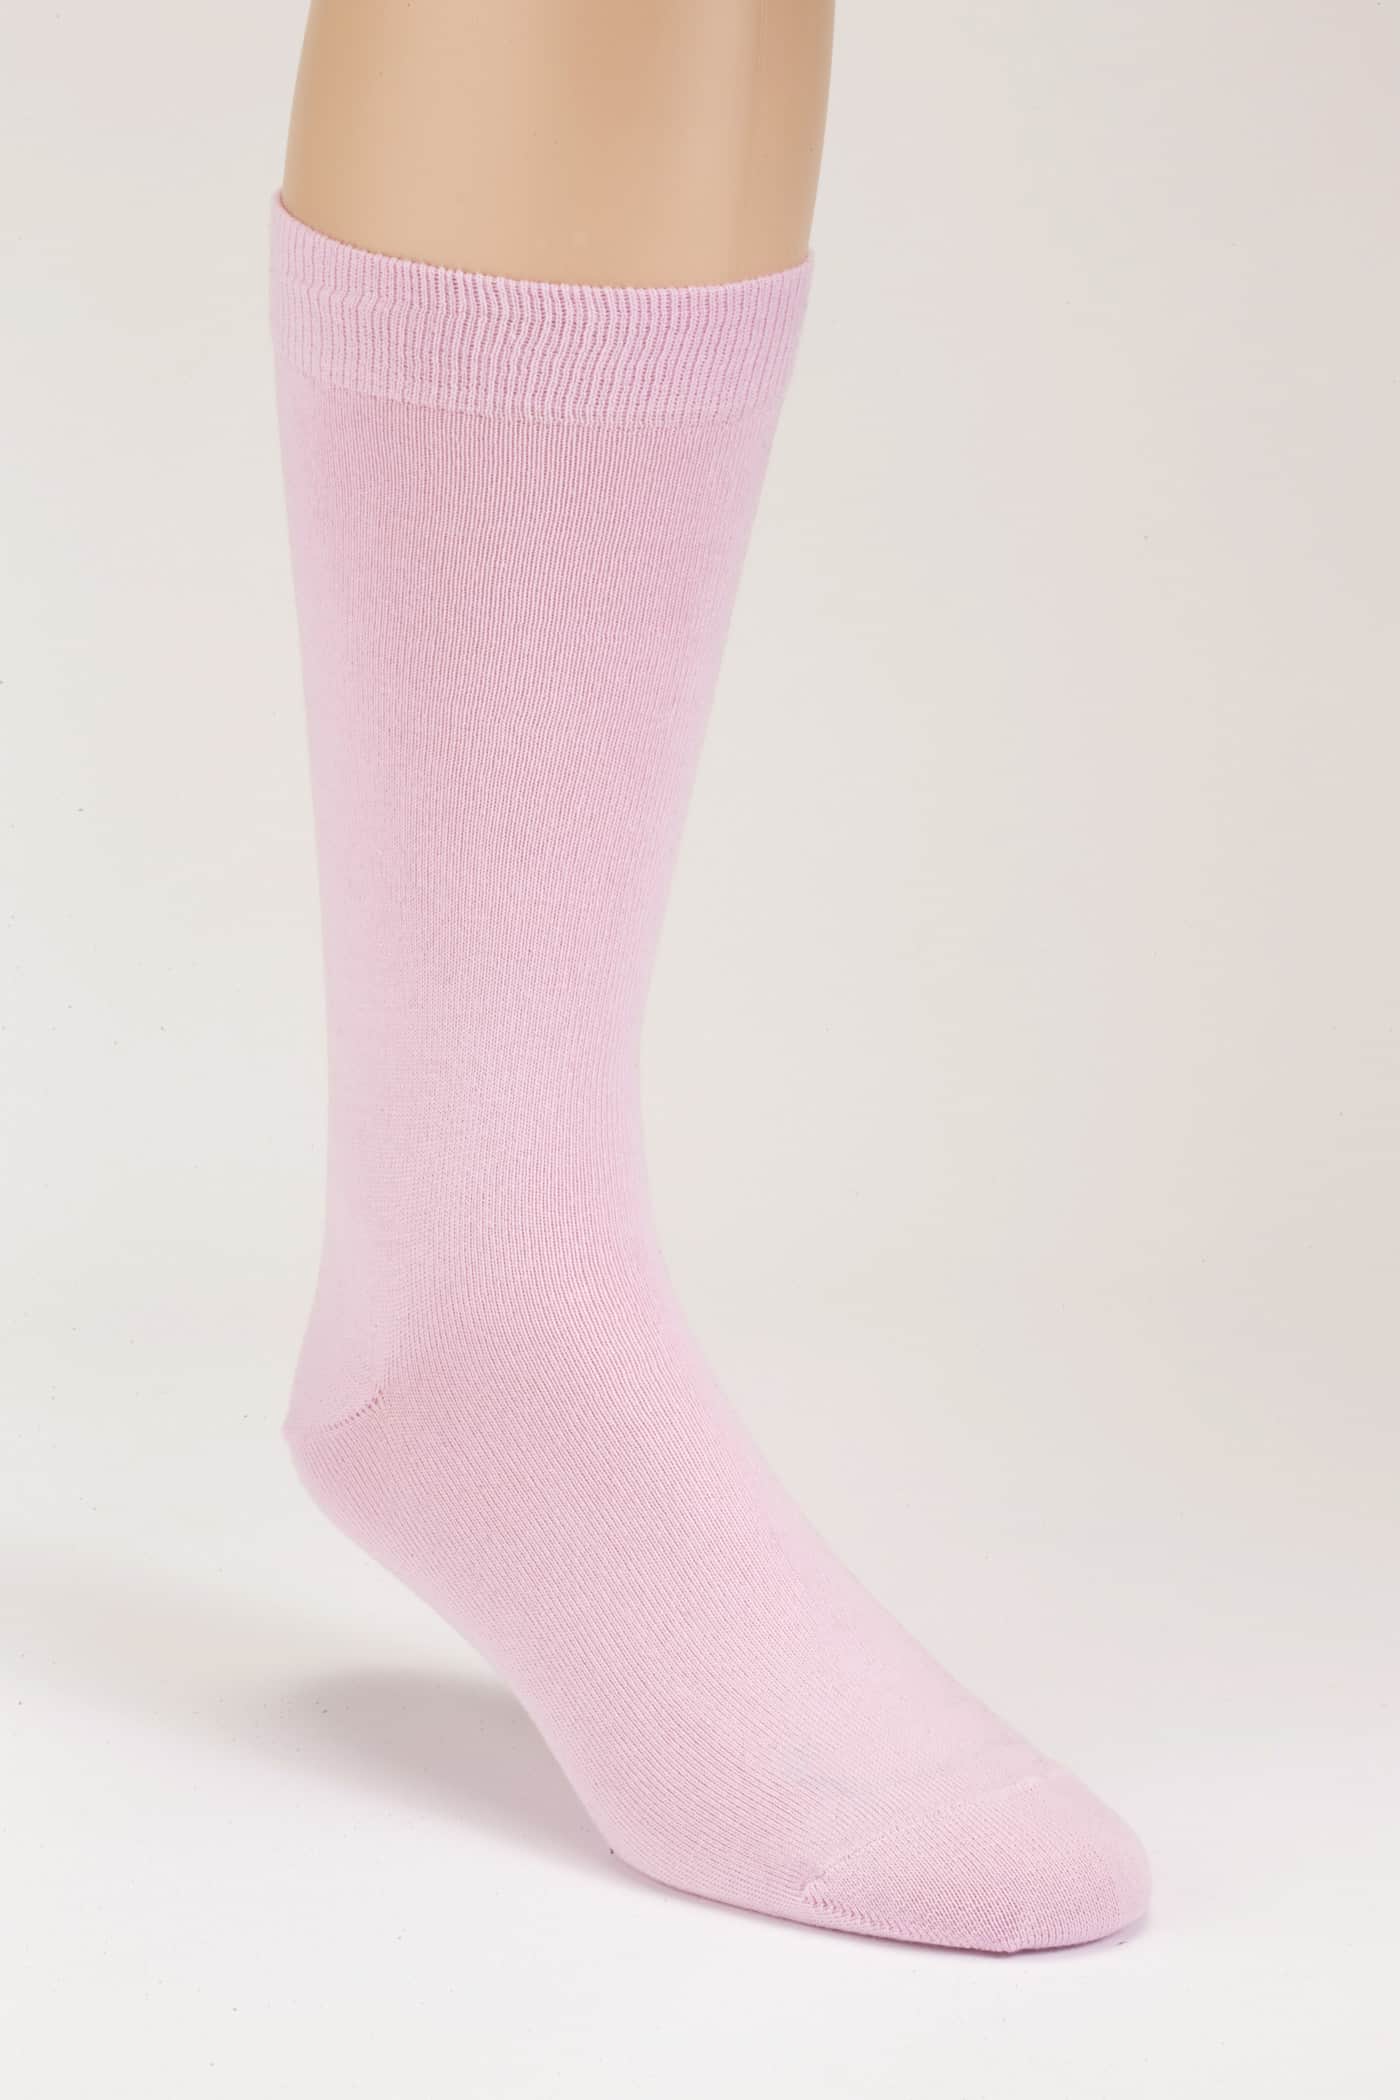 THE AMBER - Turner & Sons | Mens Socks | Cotton Socks | Wool Socks